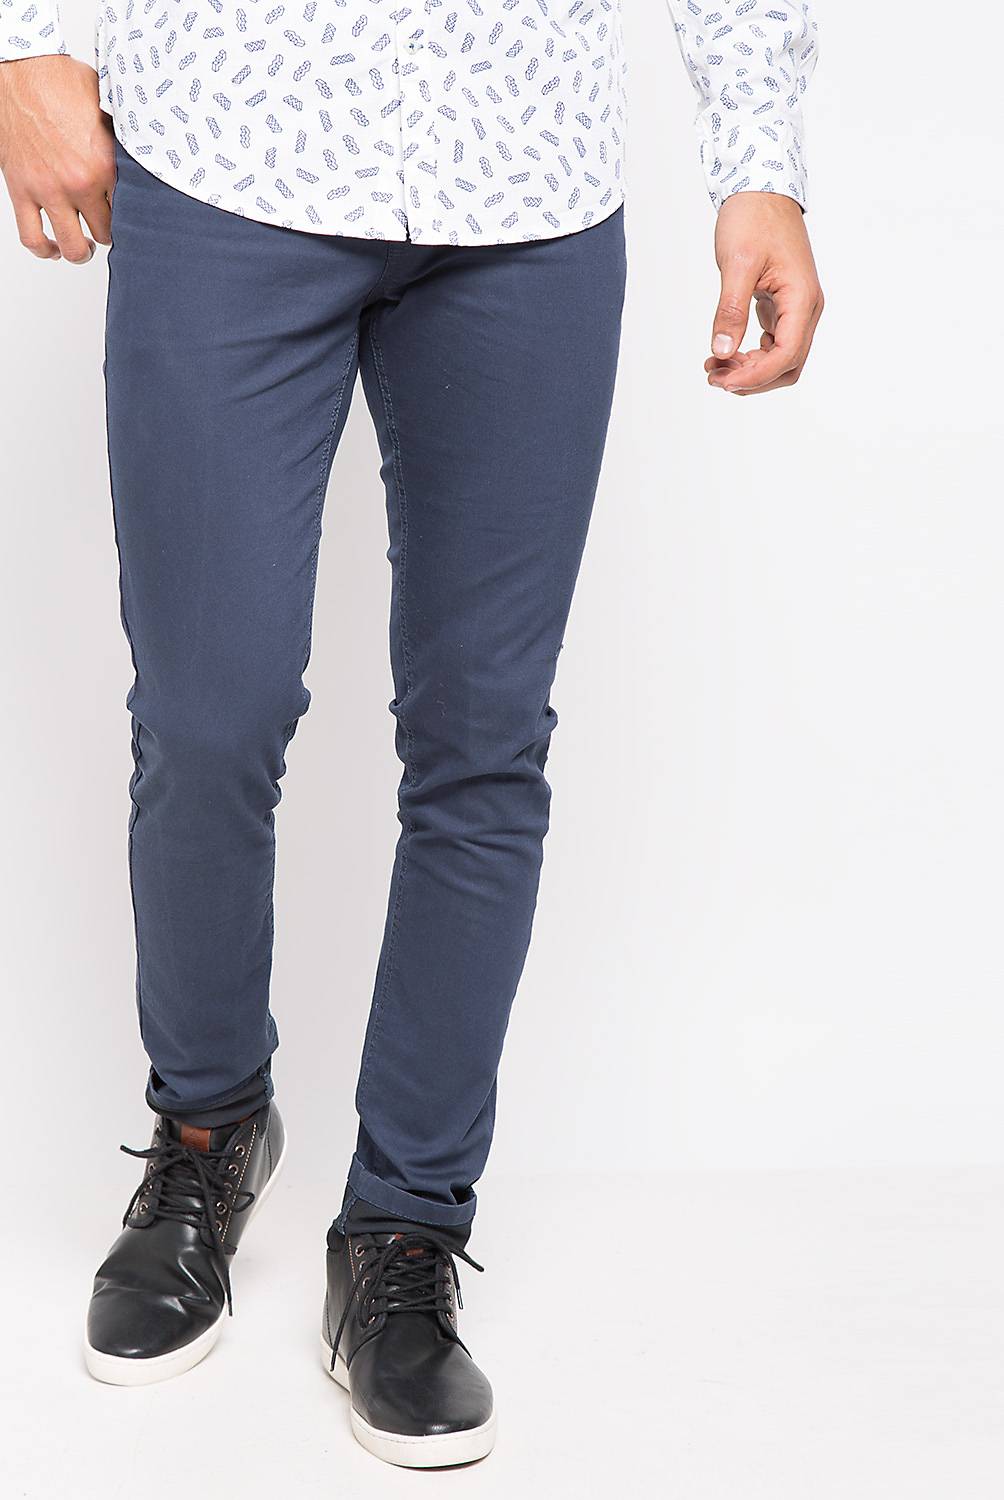 BEARCLIFF - Jeans Moda JDSK Color S18